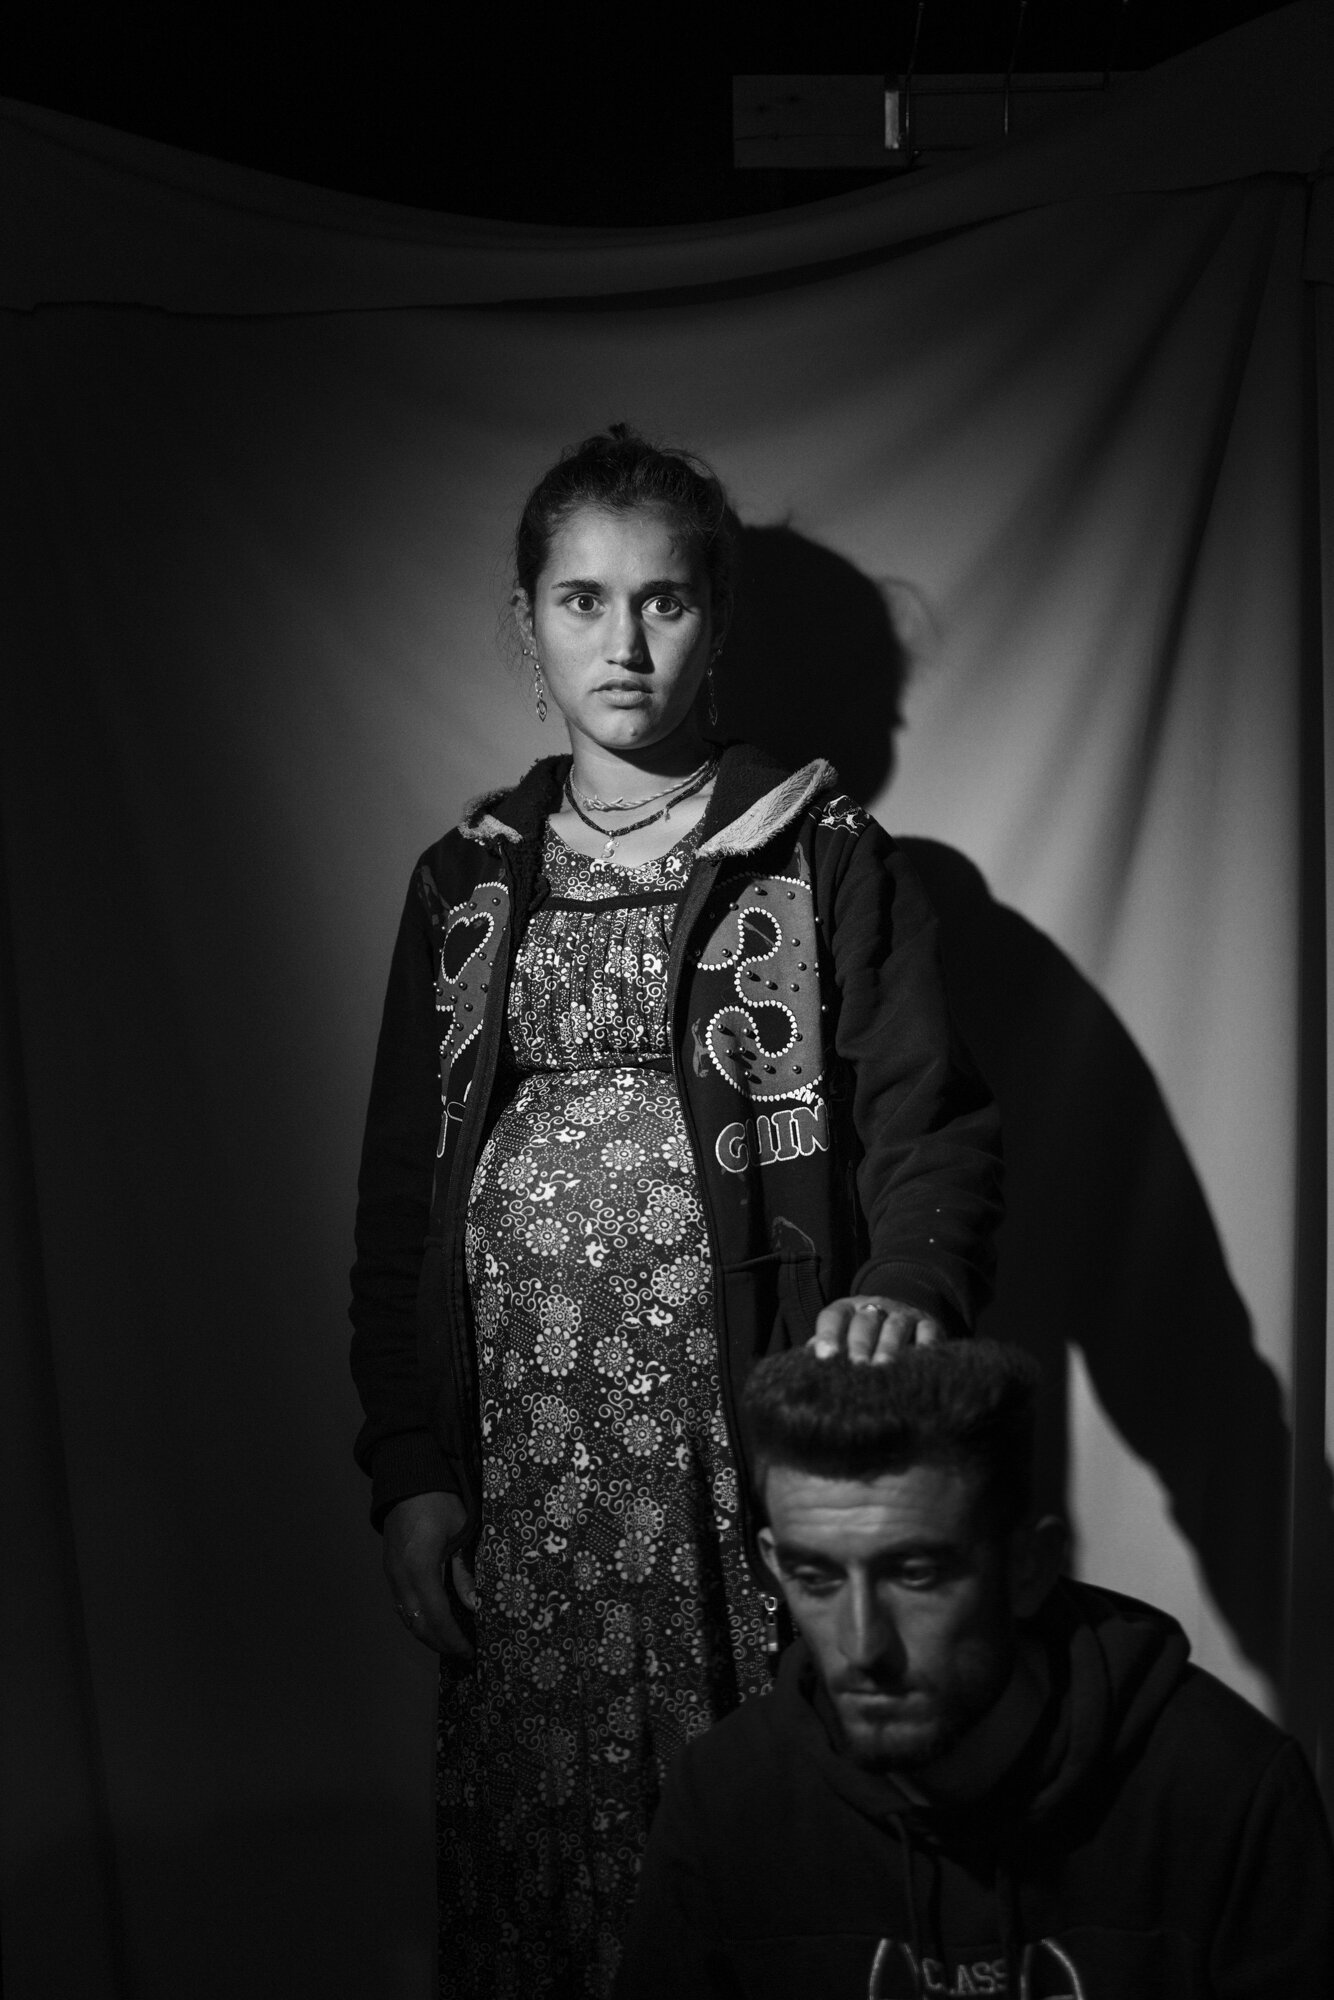  Sumaya Ahmad is 21. She won’t go outside and thinks about killing herself. Iraq, 2019. 